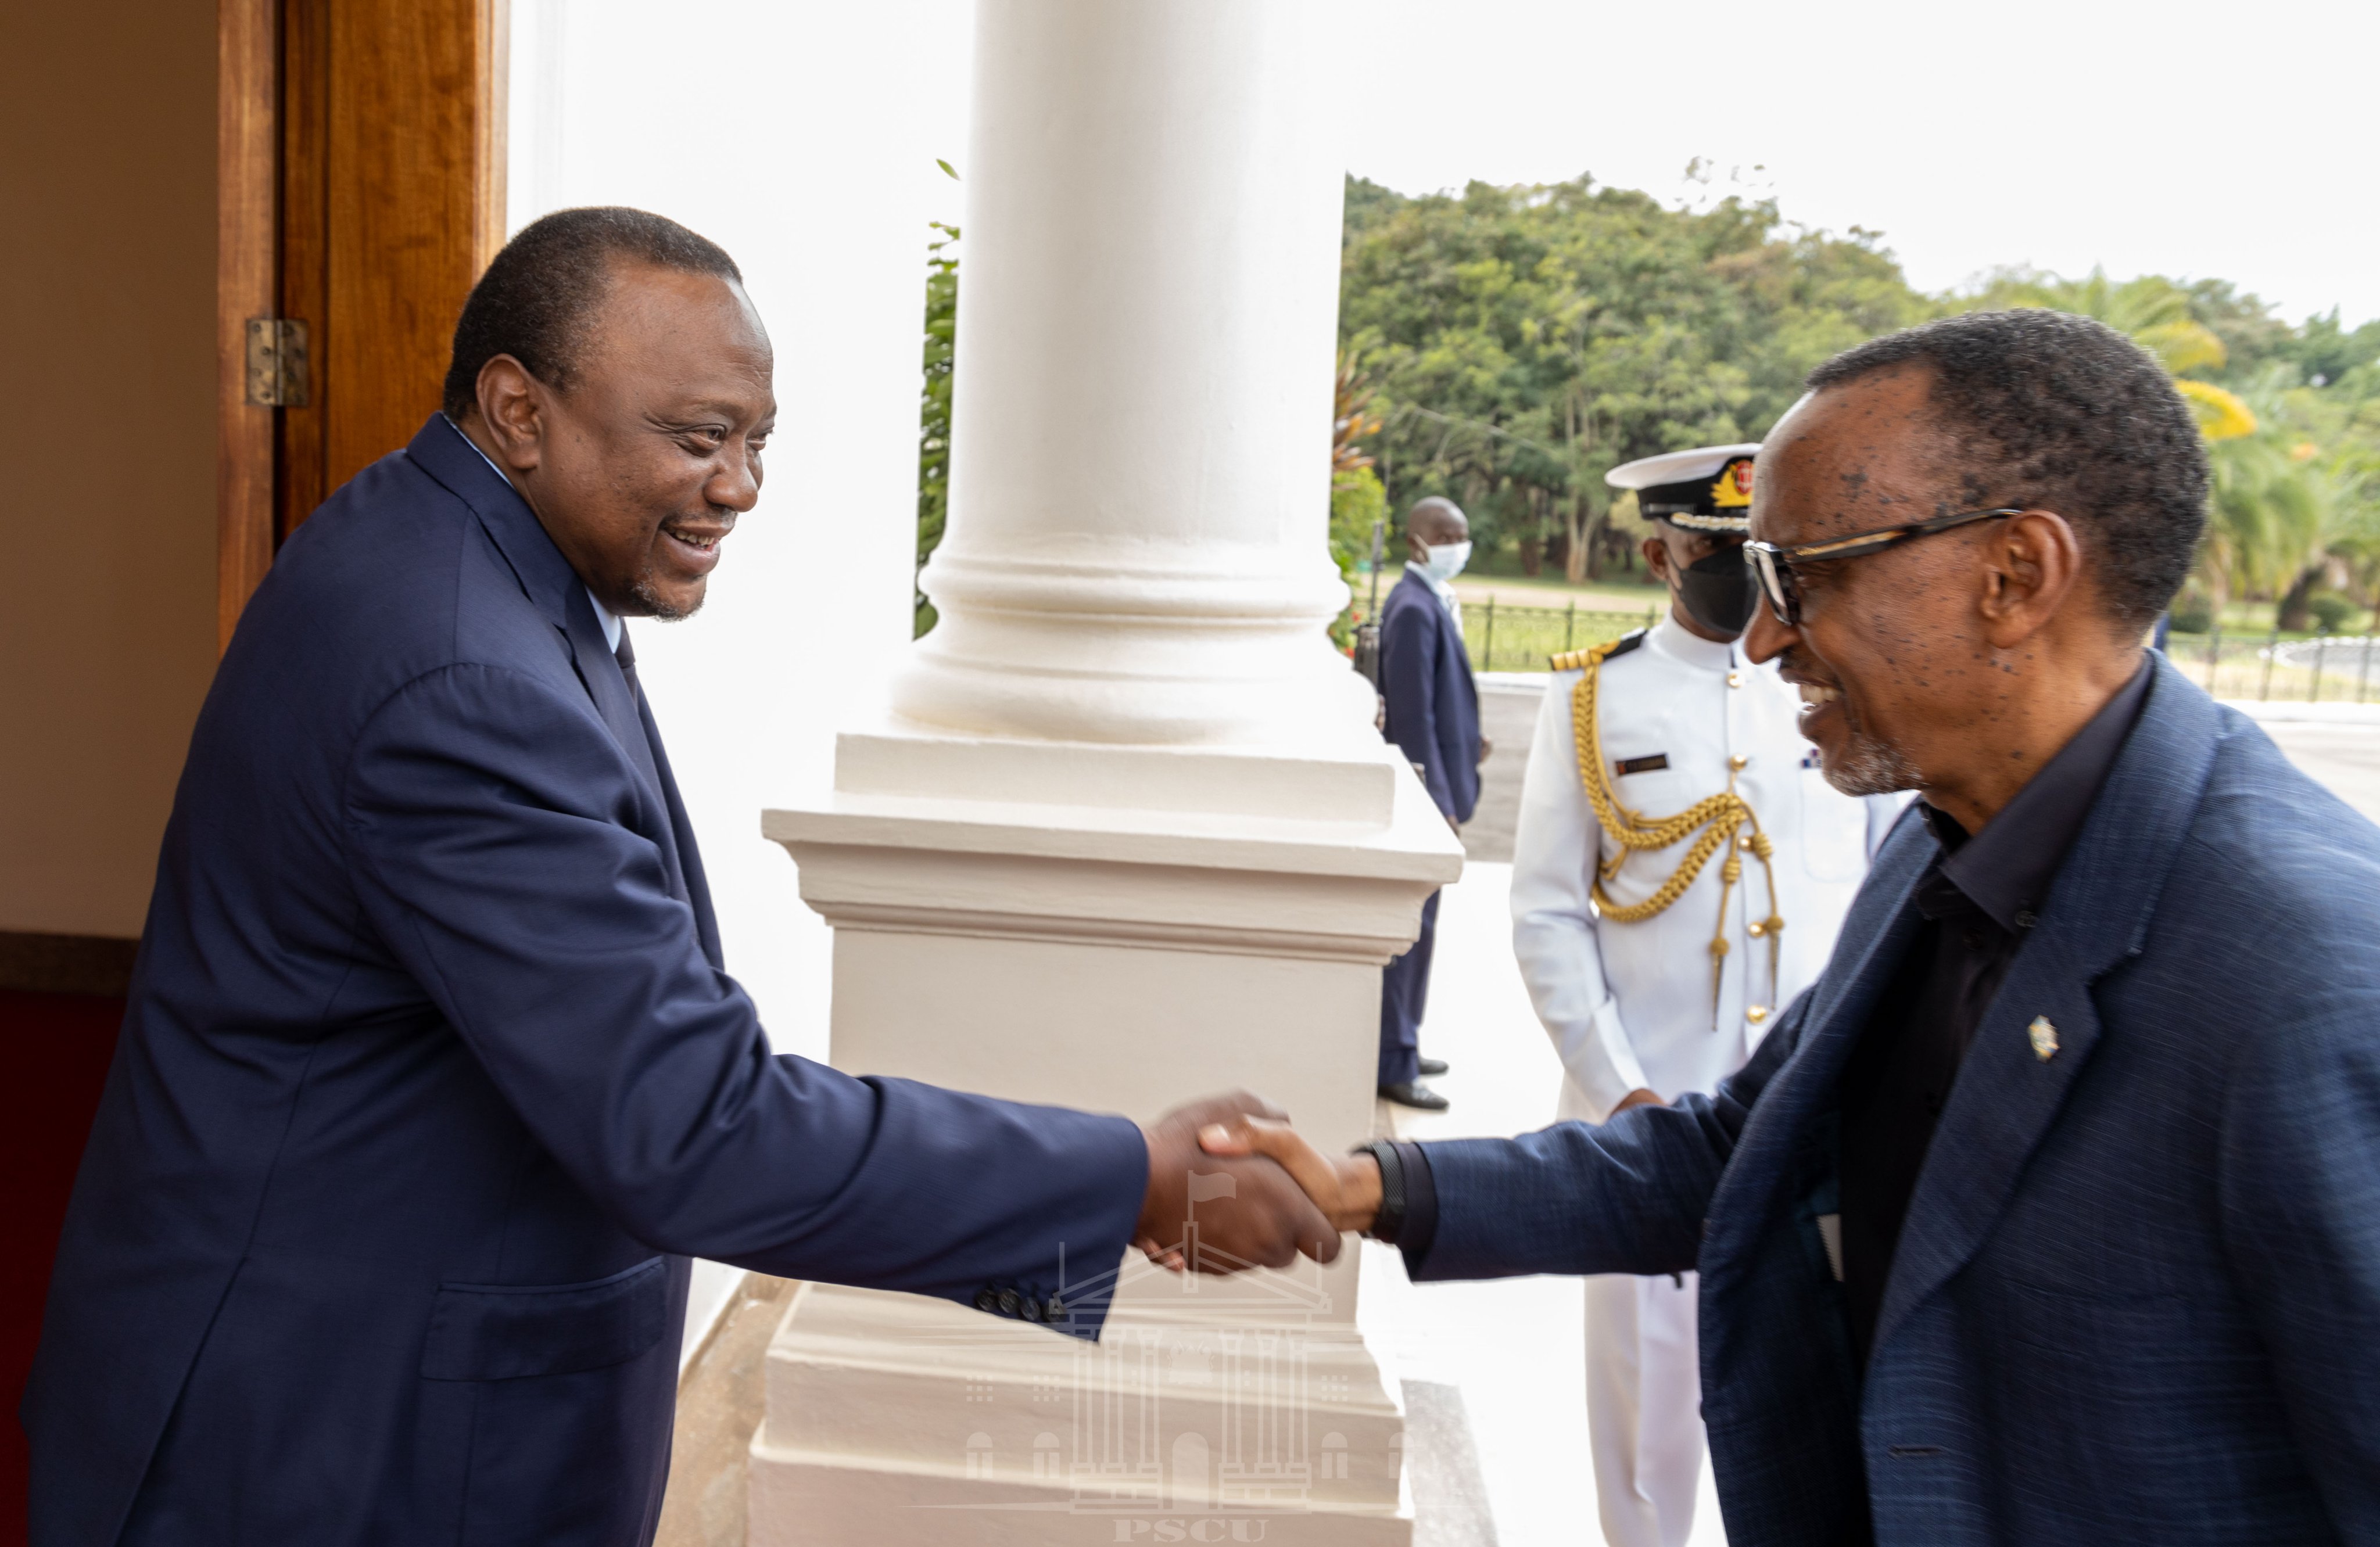 President Kenyatta welcomes President Kagame to State House Nairobi ahead of the Congo talks on Monday, June 20. 